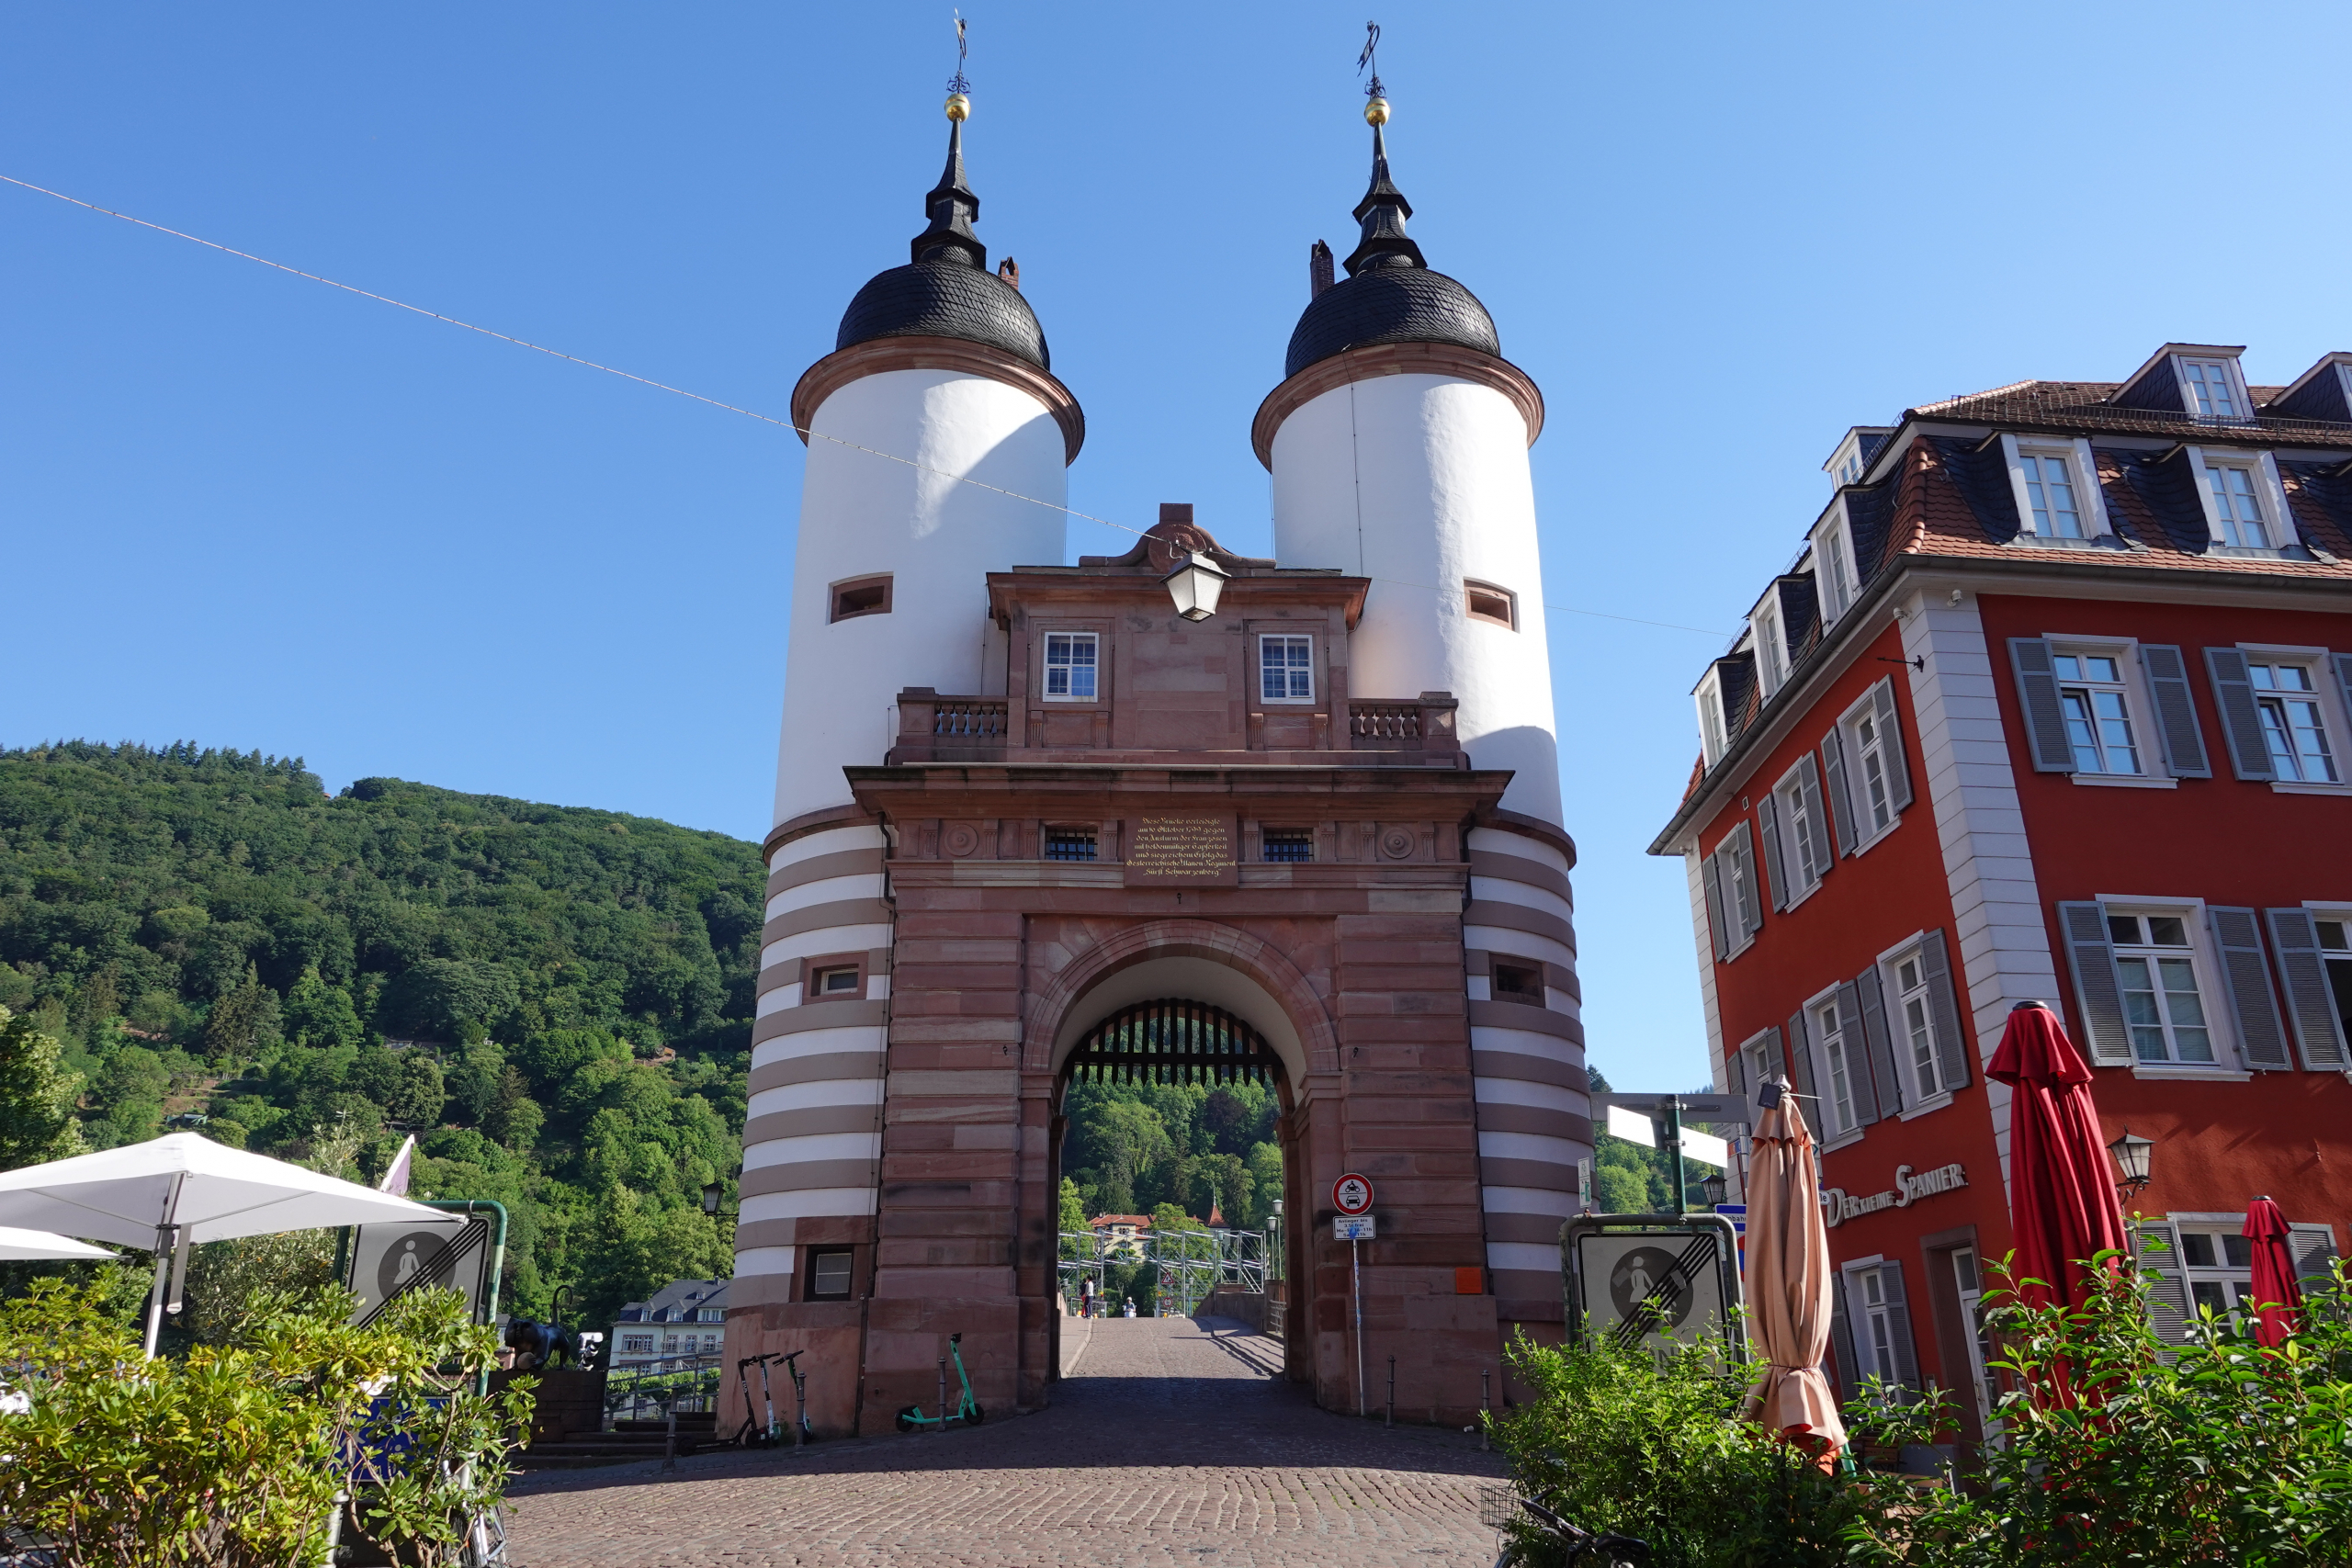 Bridge Gate at the entrance of the Old Bridge in Heidelberg, Germany